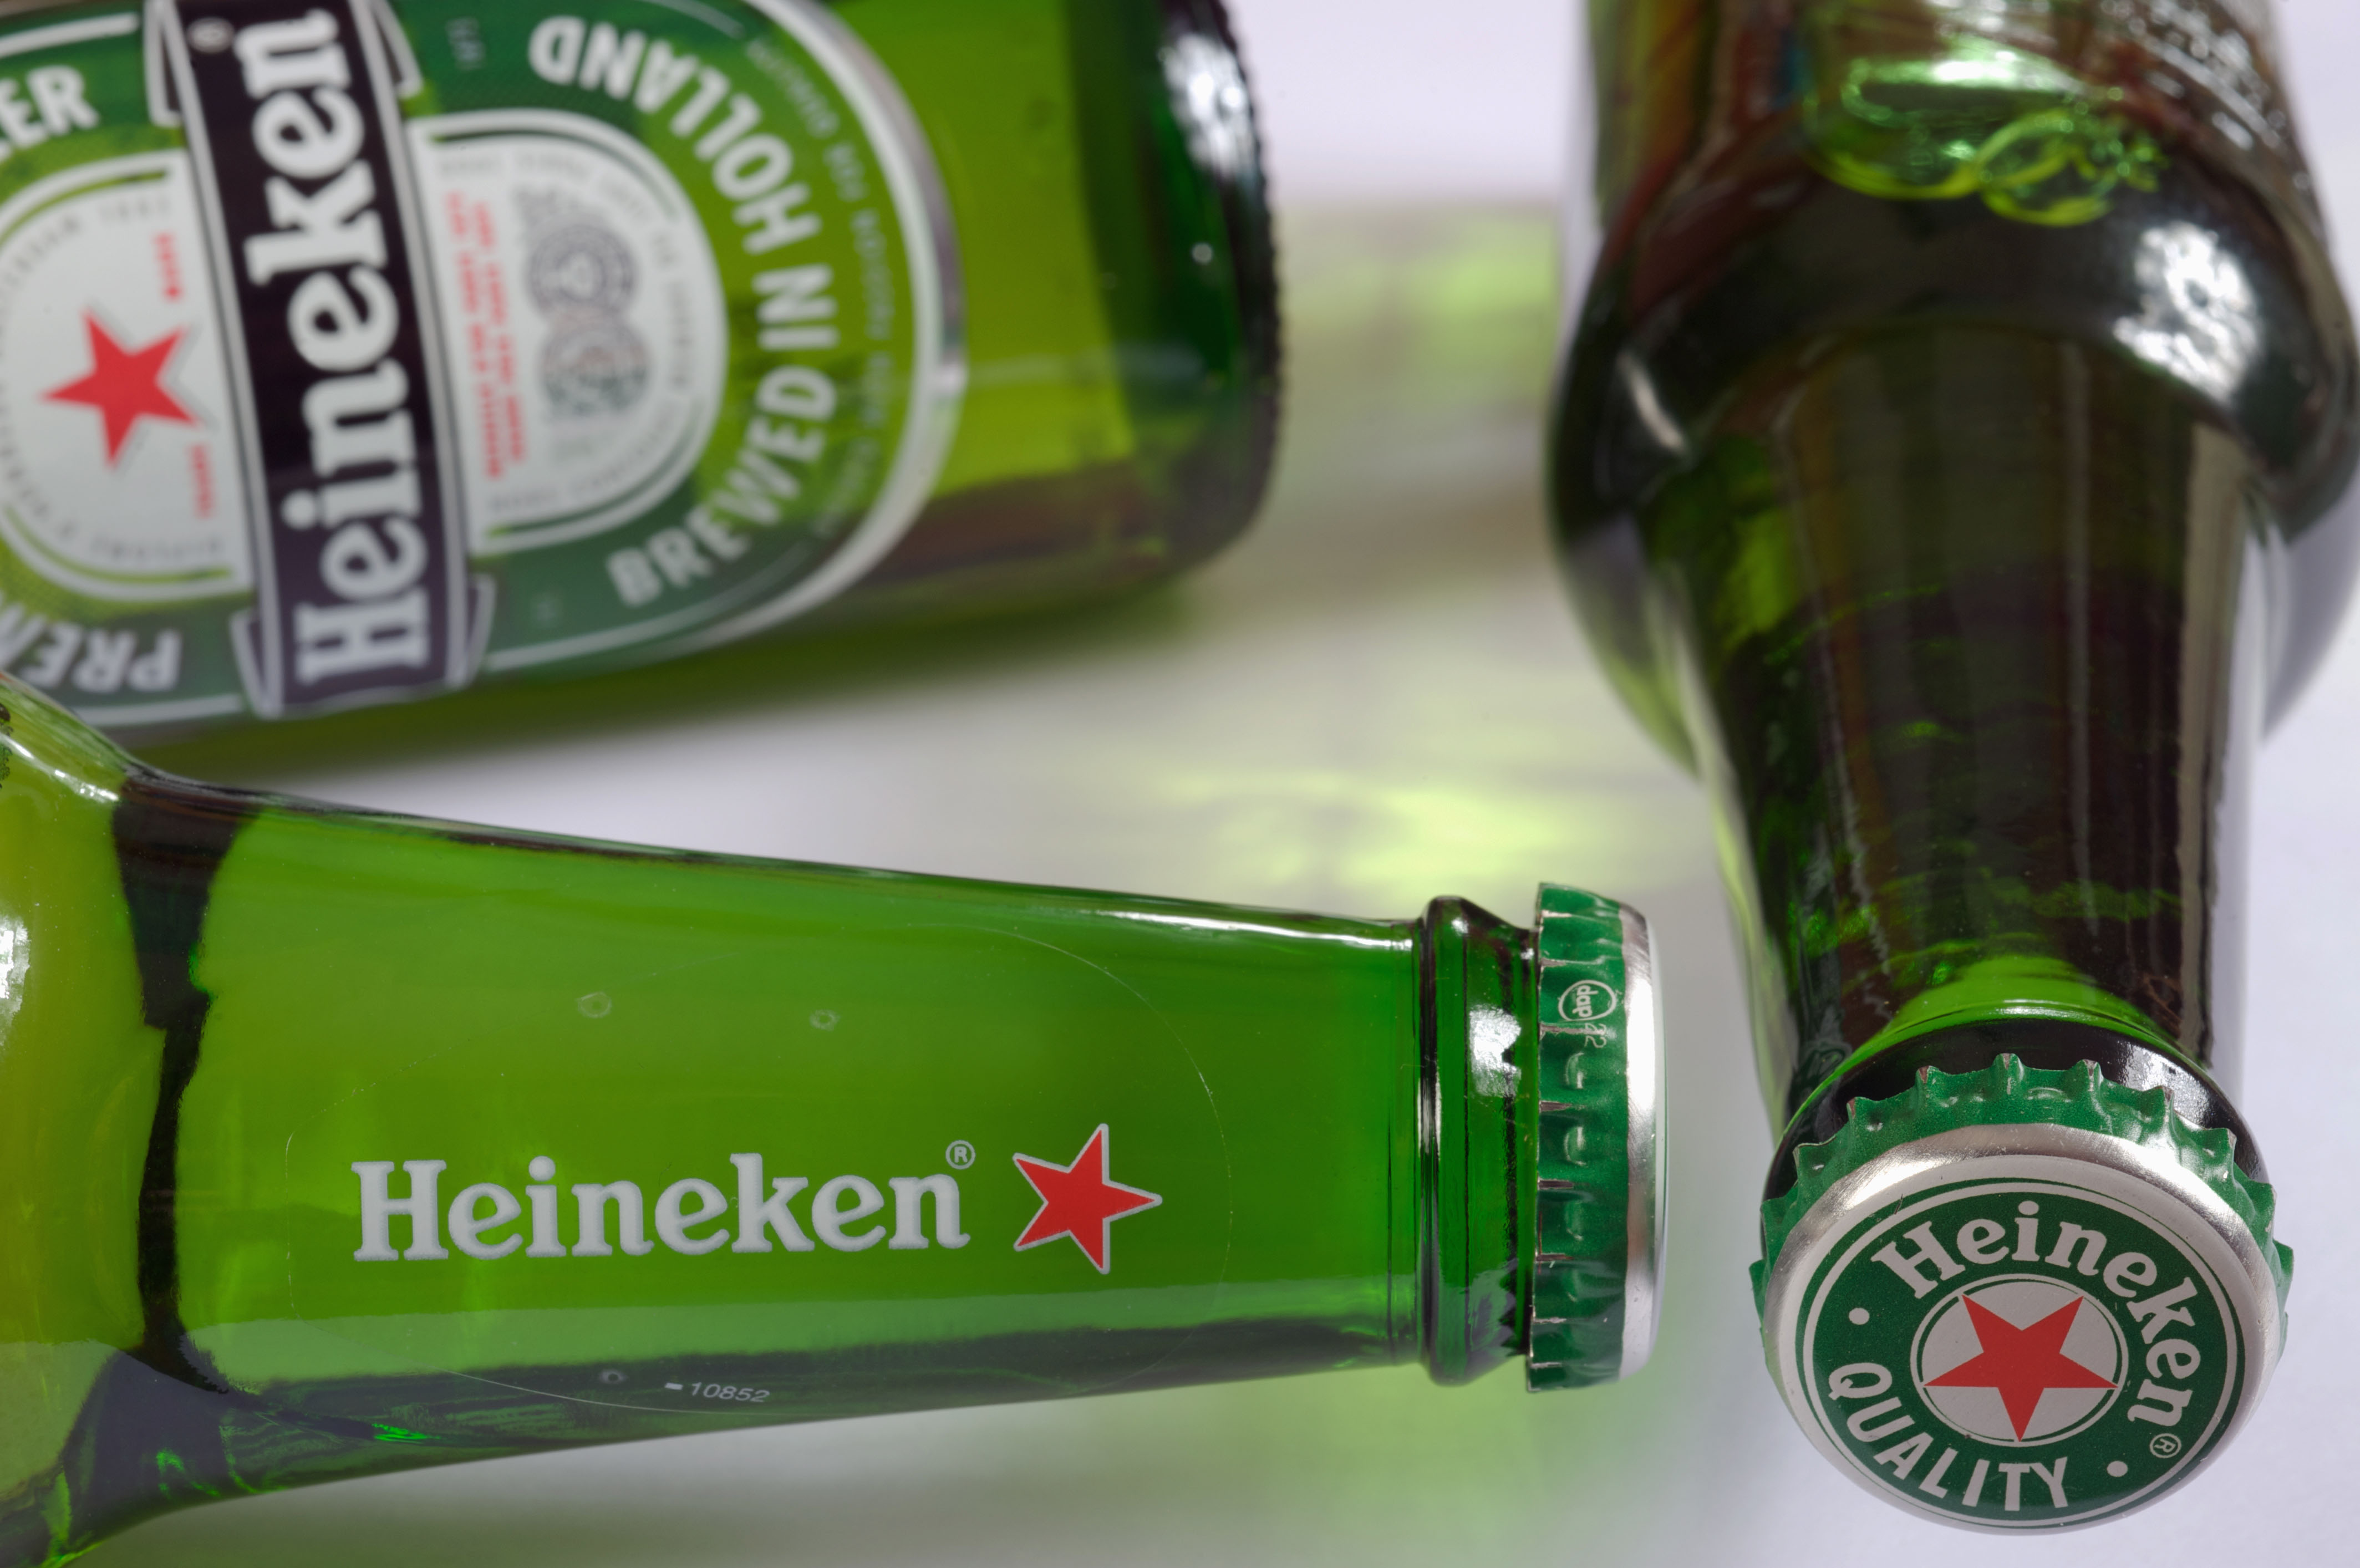 Heineken bottles